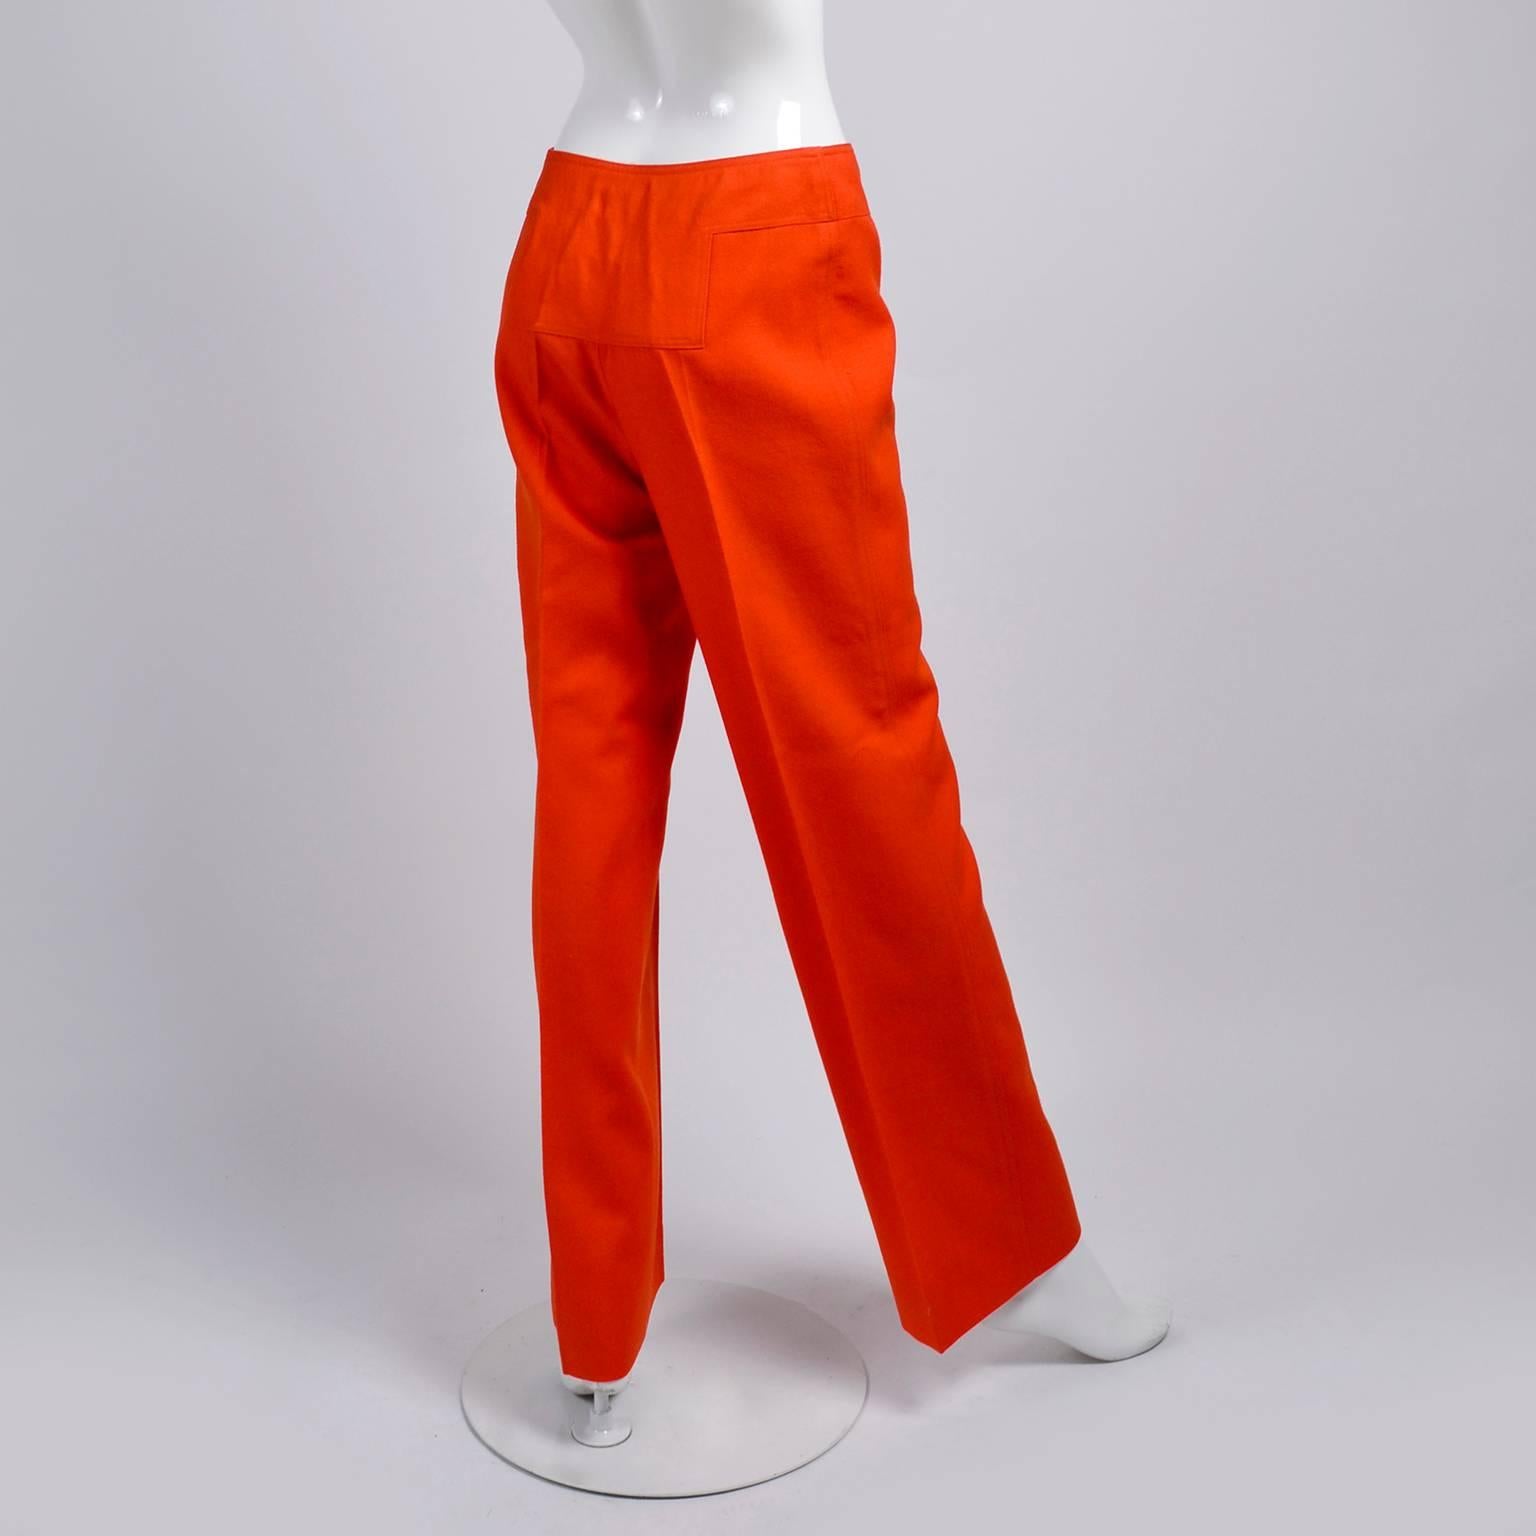 high waisted orange pants